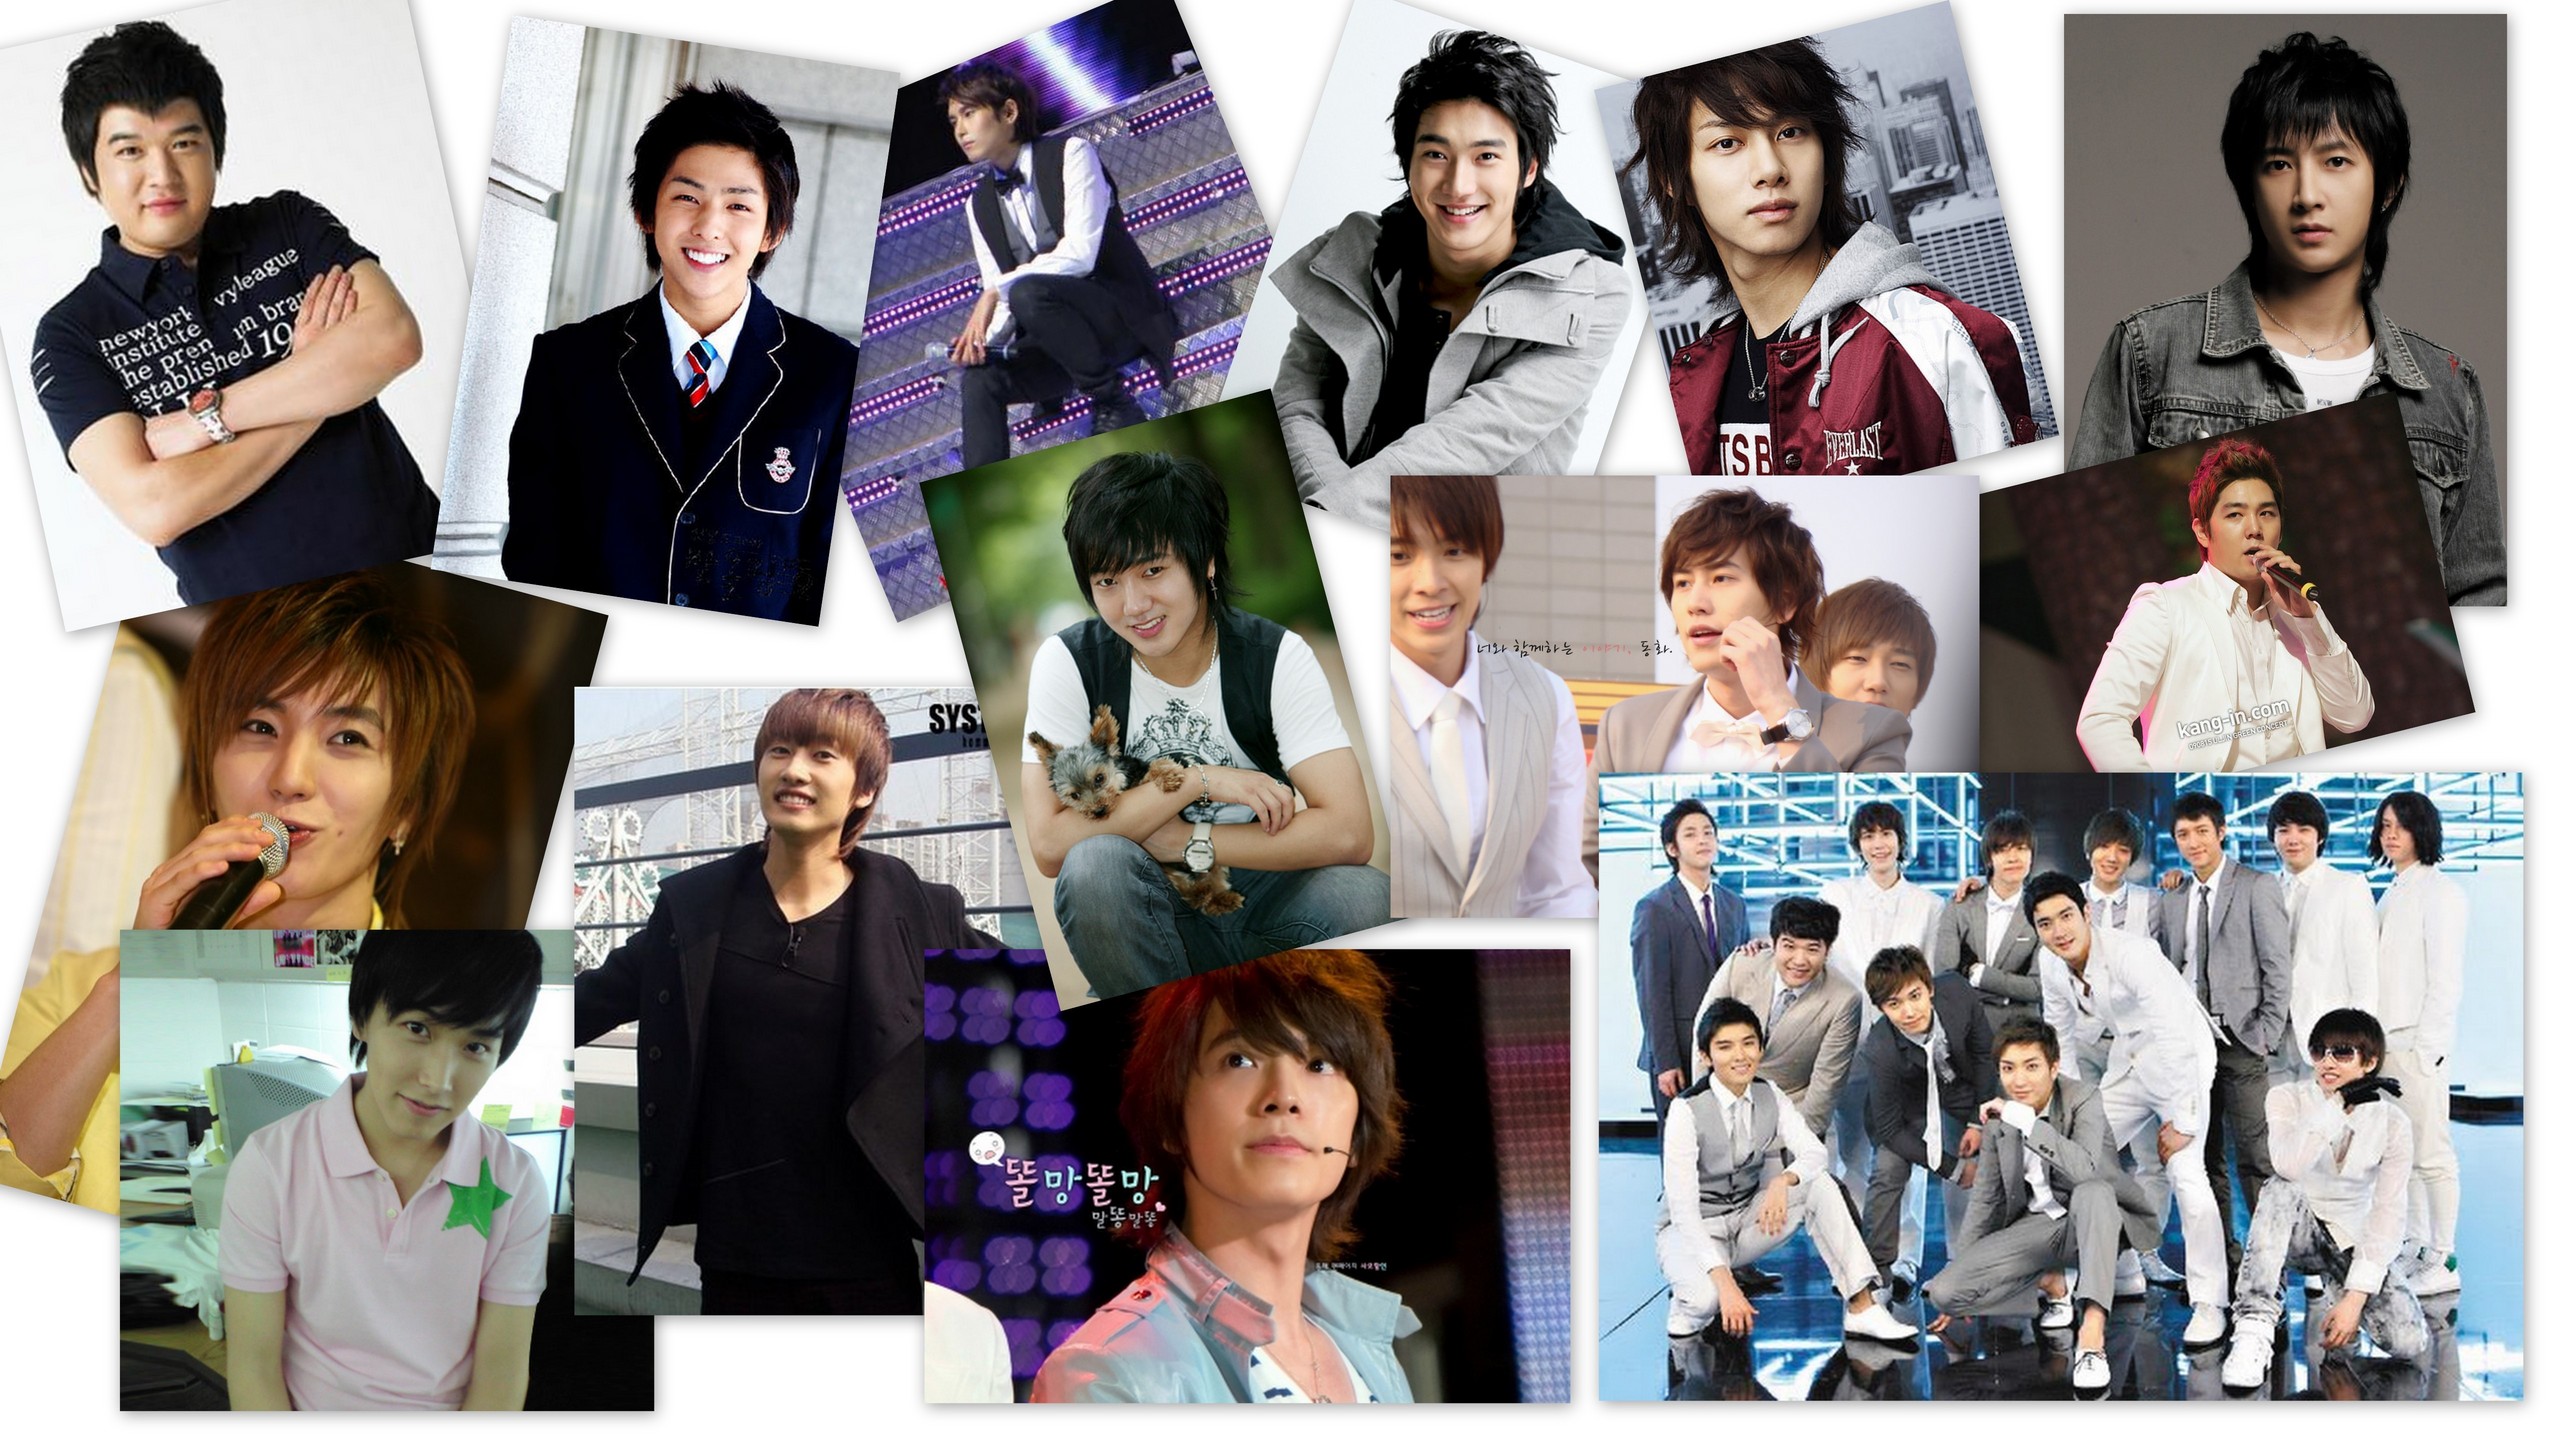 Super Junior 13 Forever!! - Super Junior Wallpaper (15300850) - Fanpop